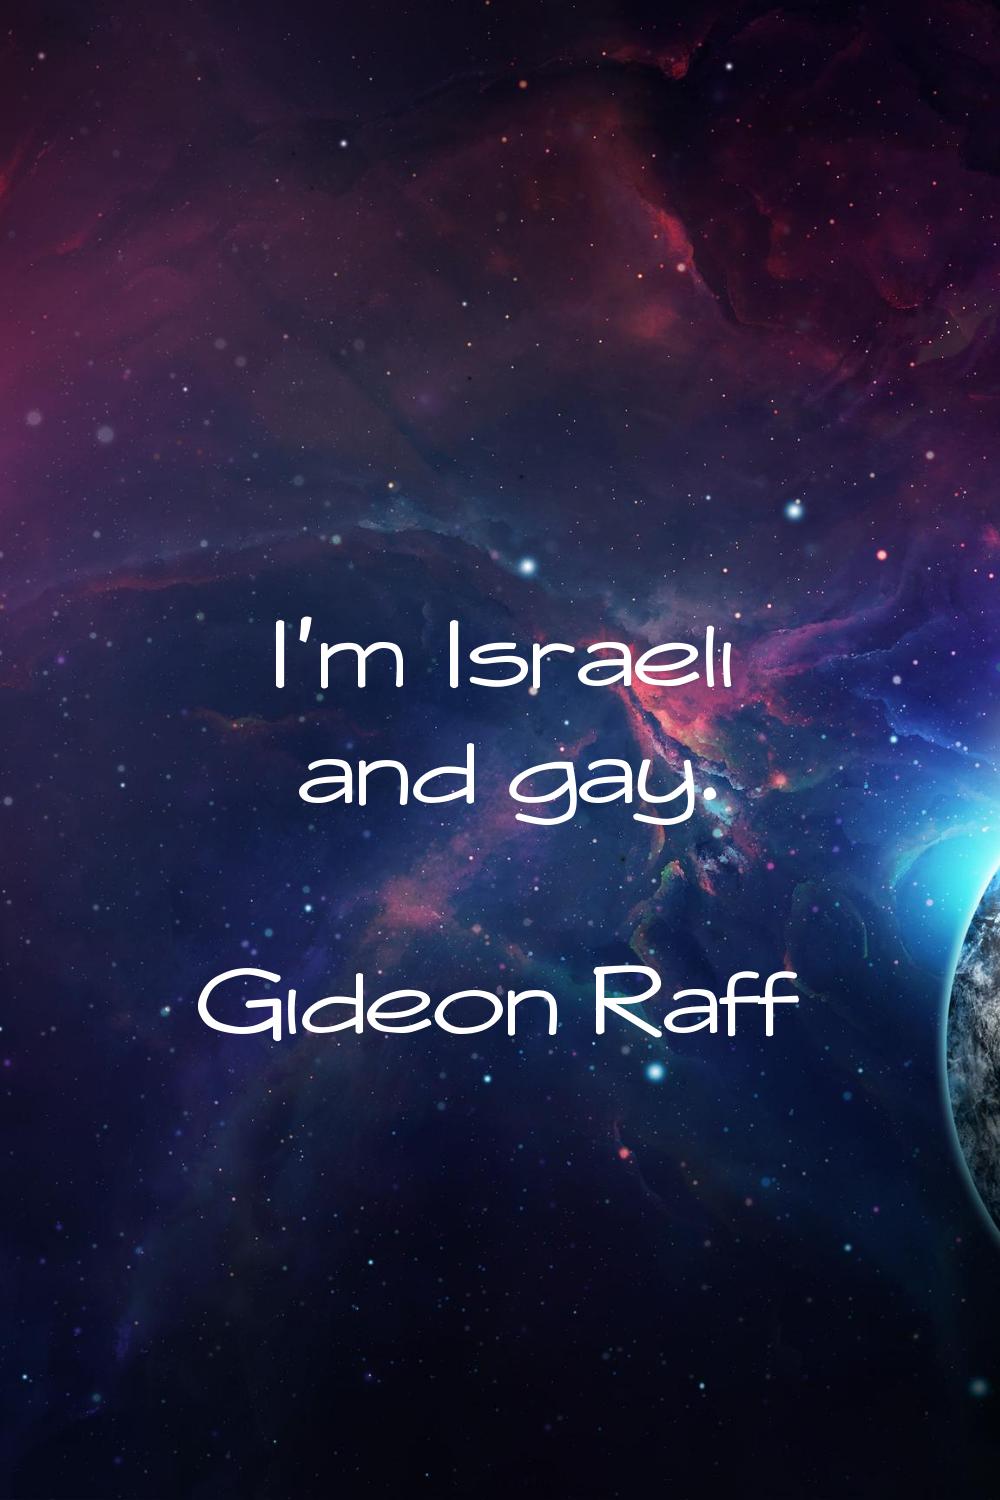 I'm Israeli and gay.